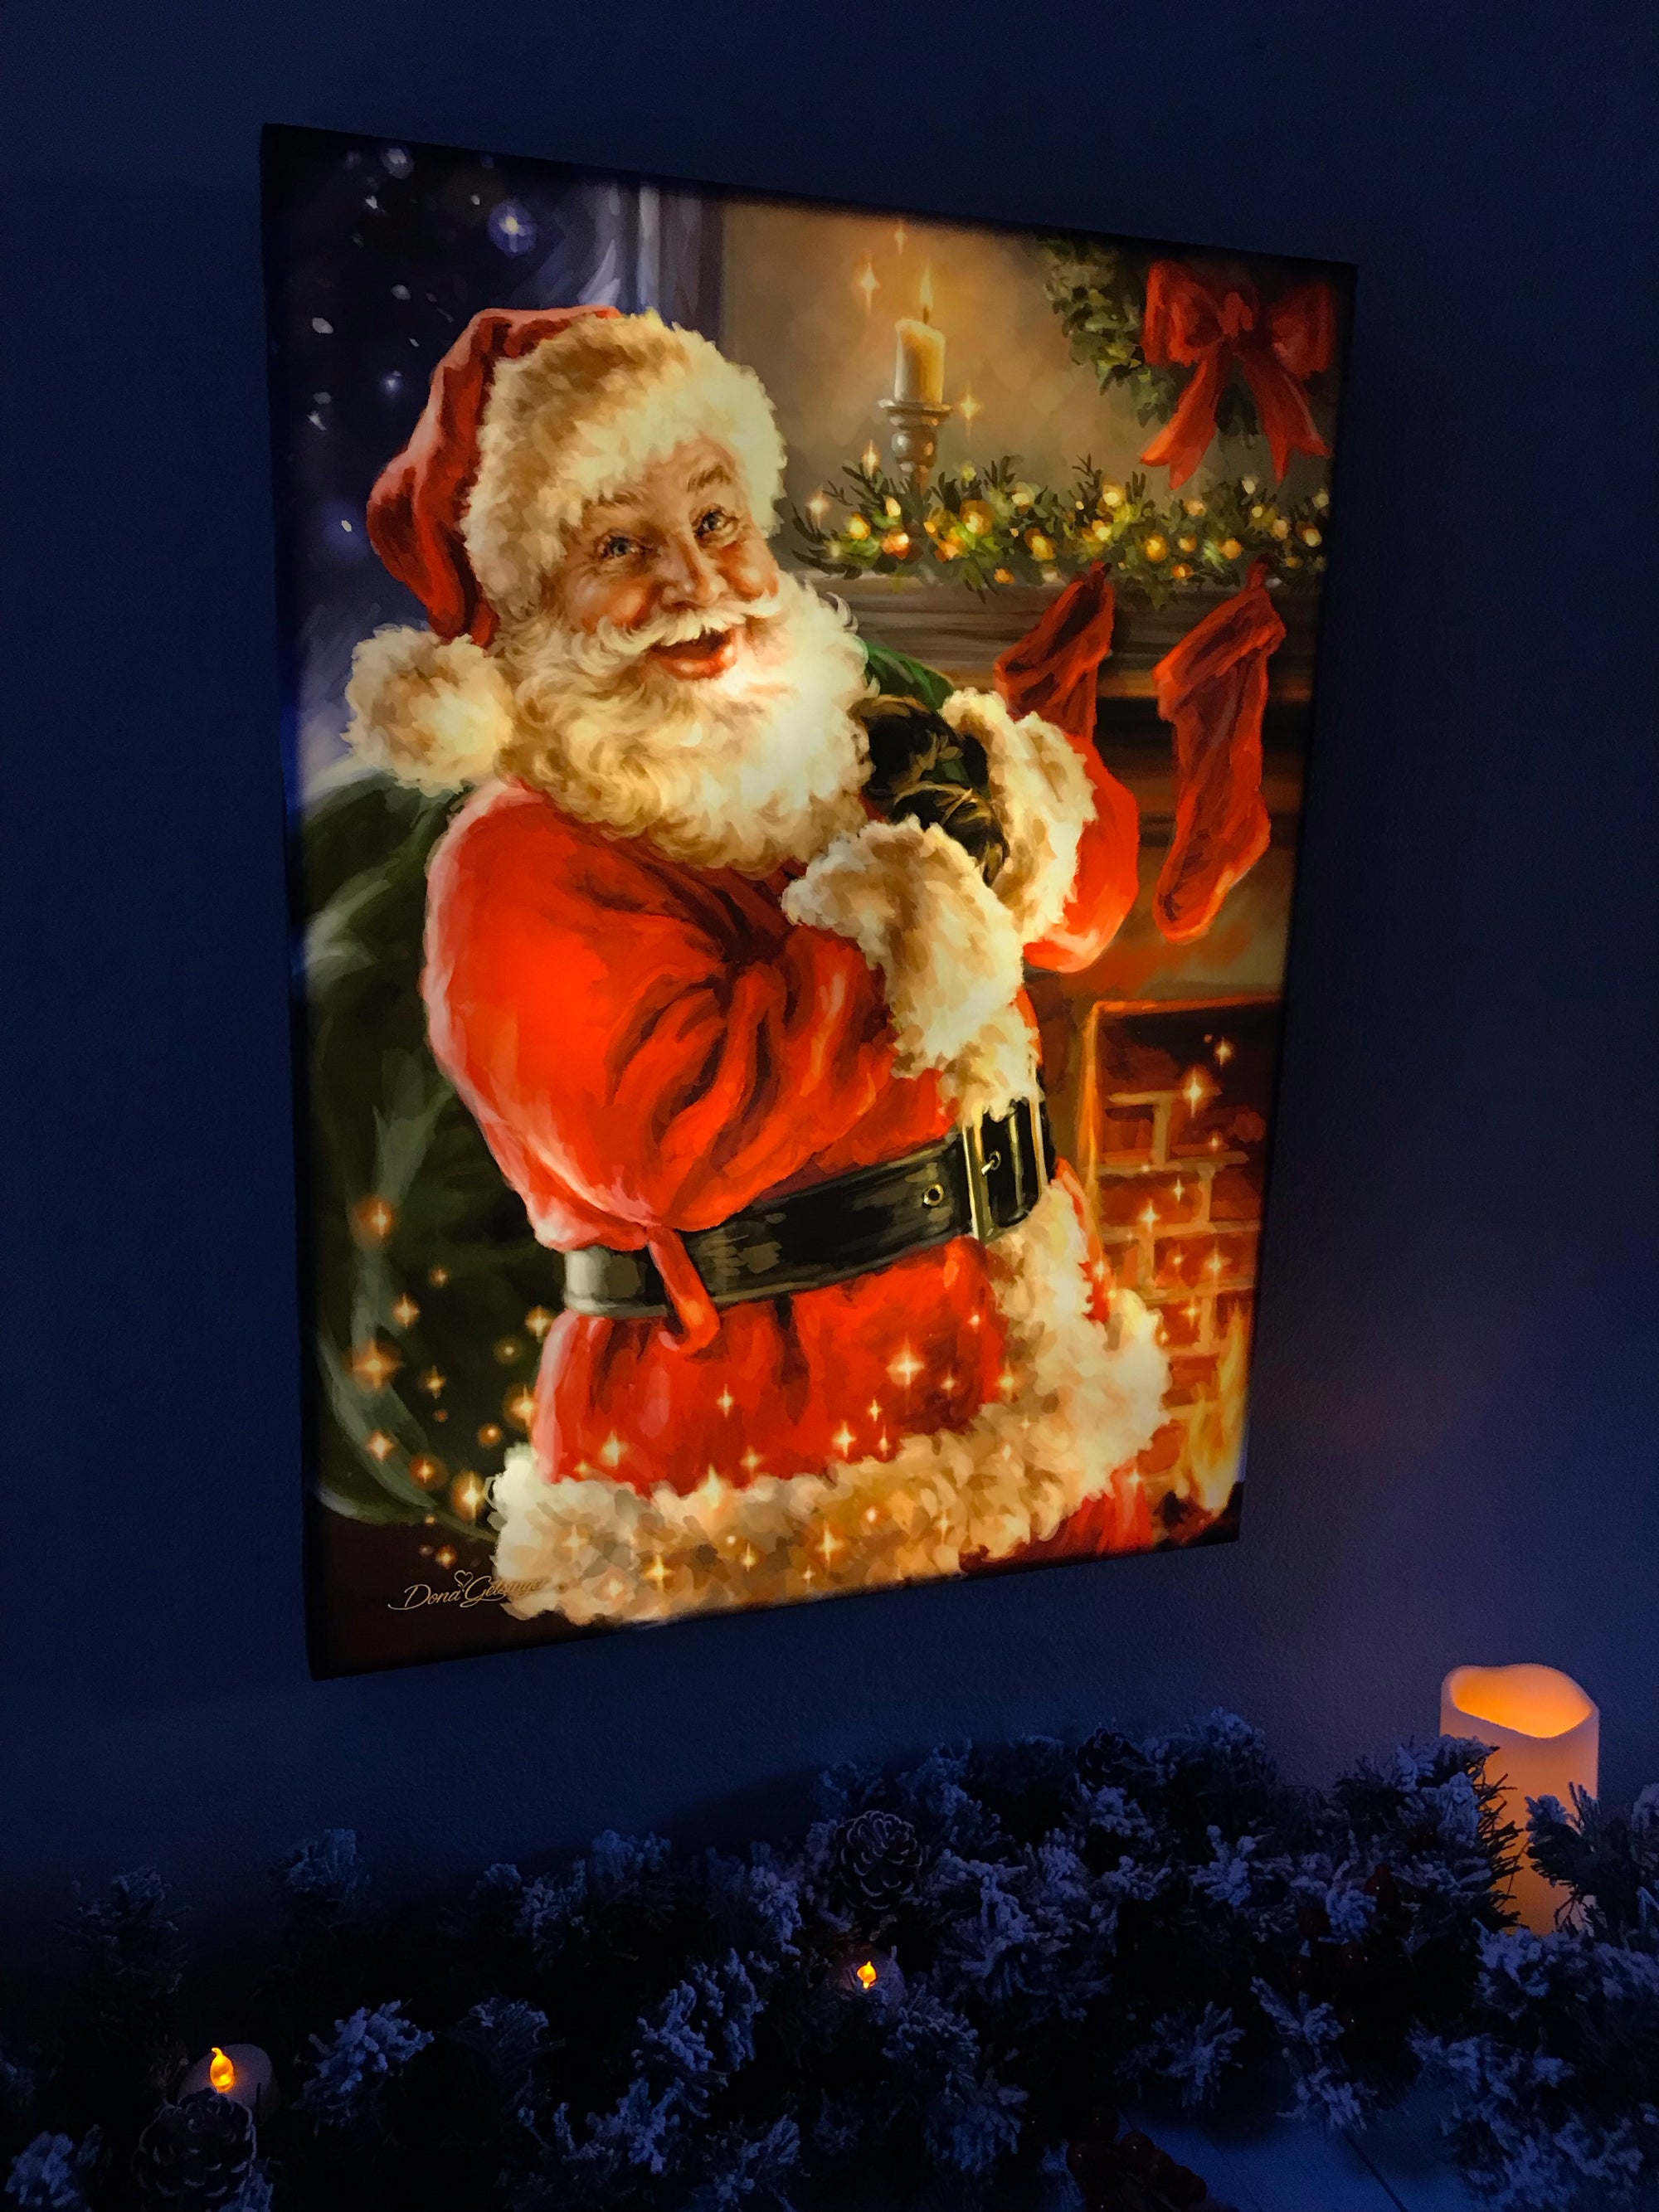 Twas the Night Before Christmas 18x24 Fully Illuminated LED Wall Art